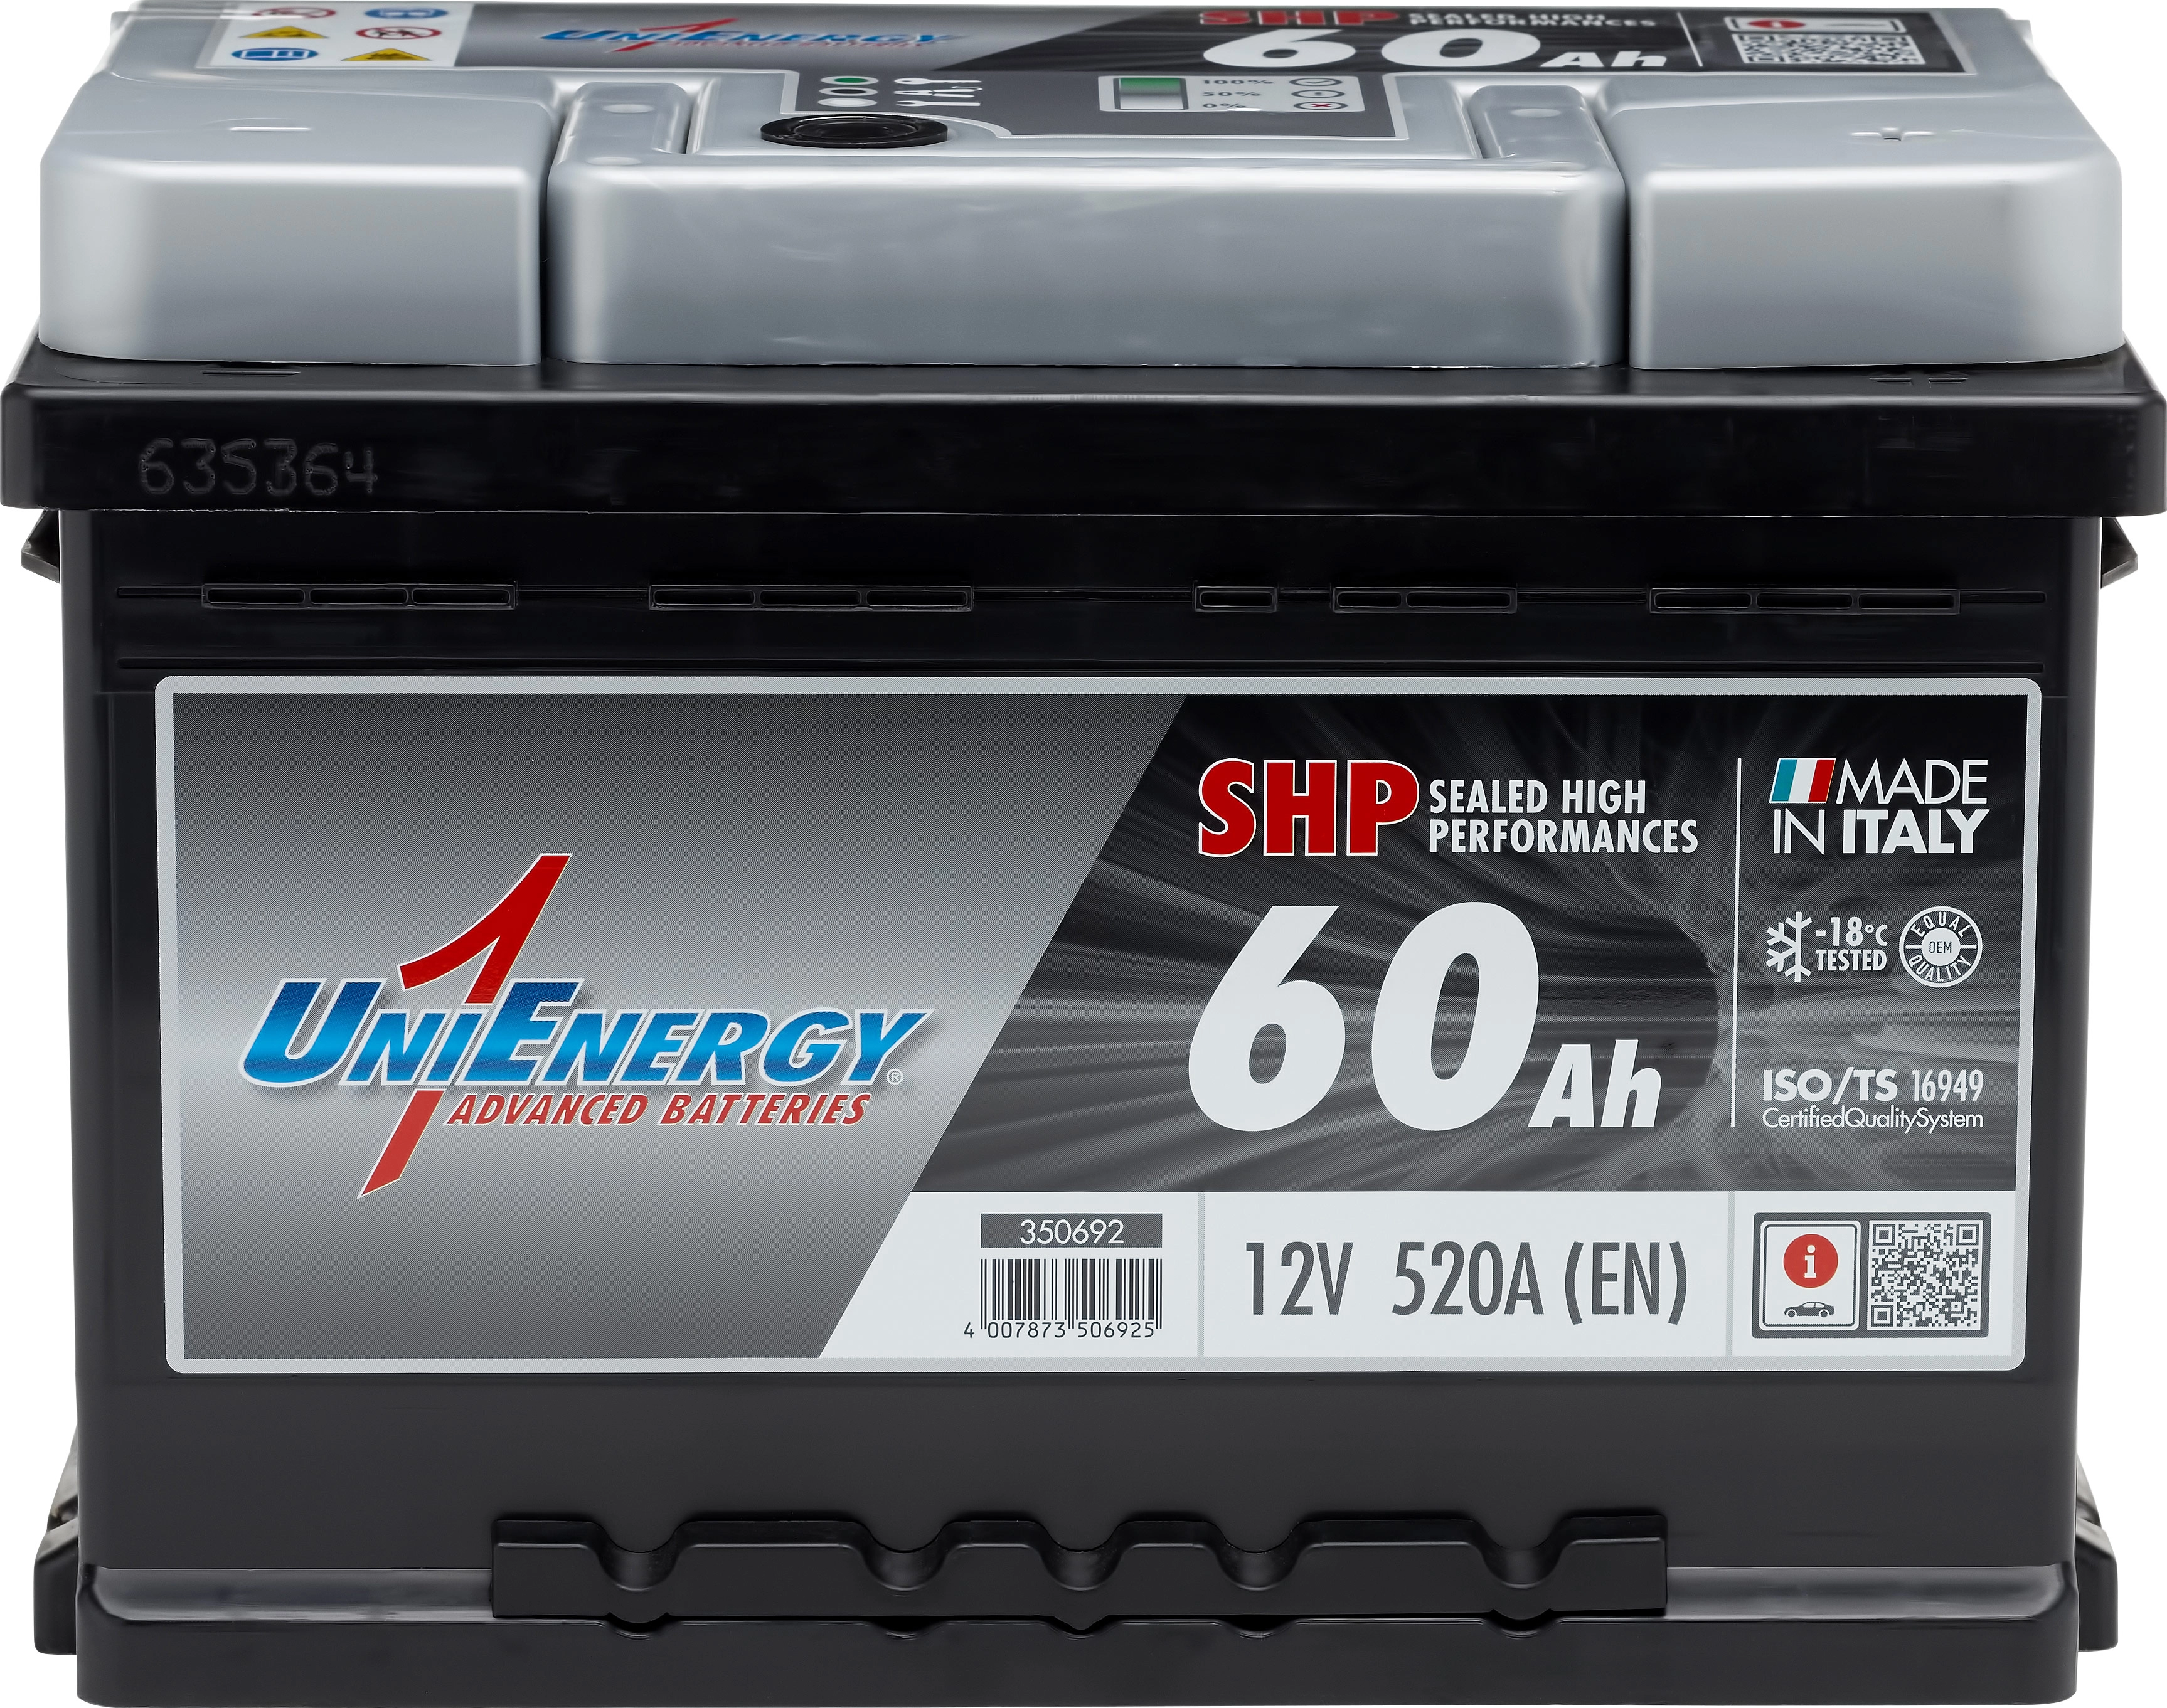 Autobatterie US Energy 56010 12V 60Ah günstig kaufen